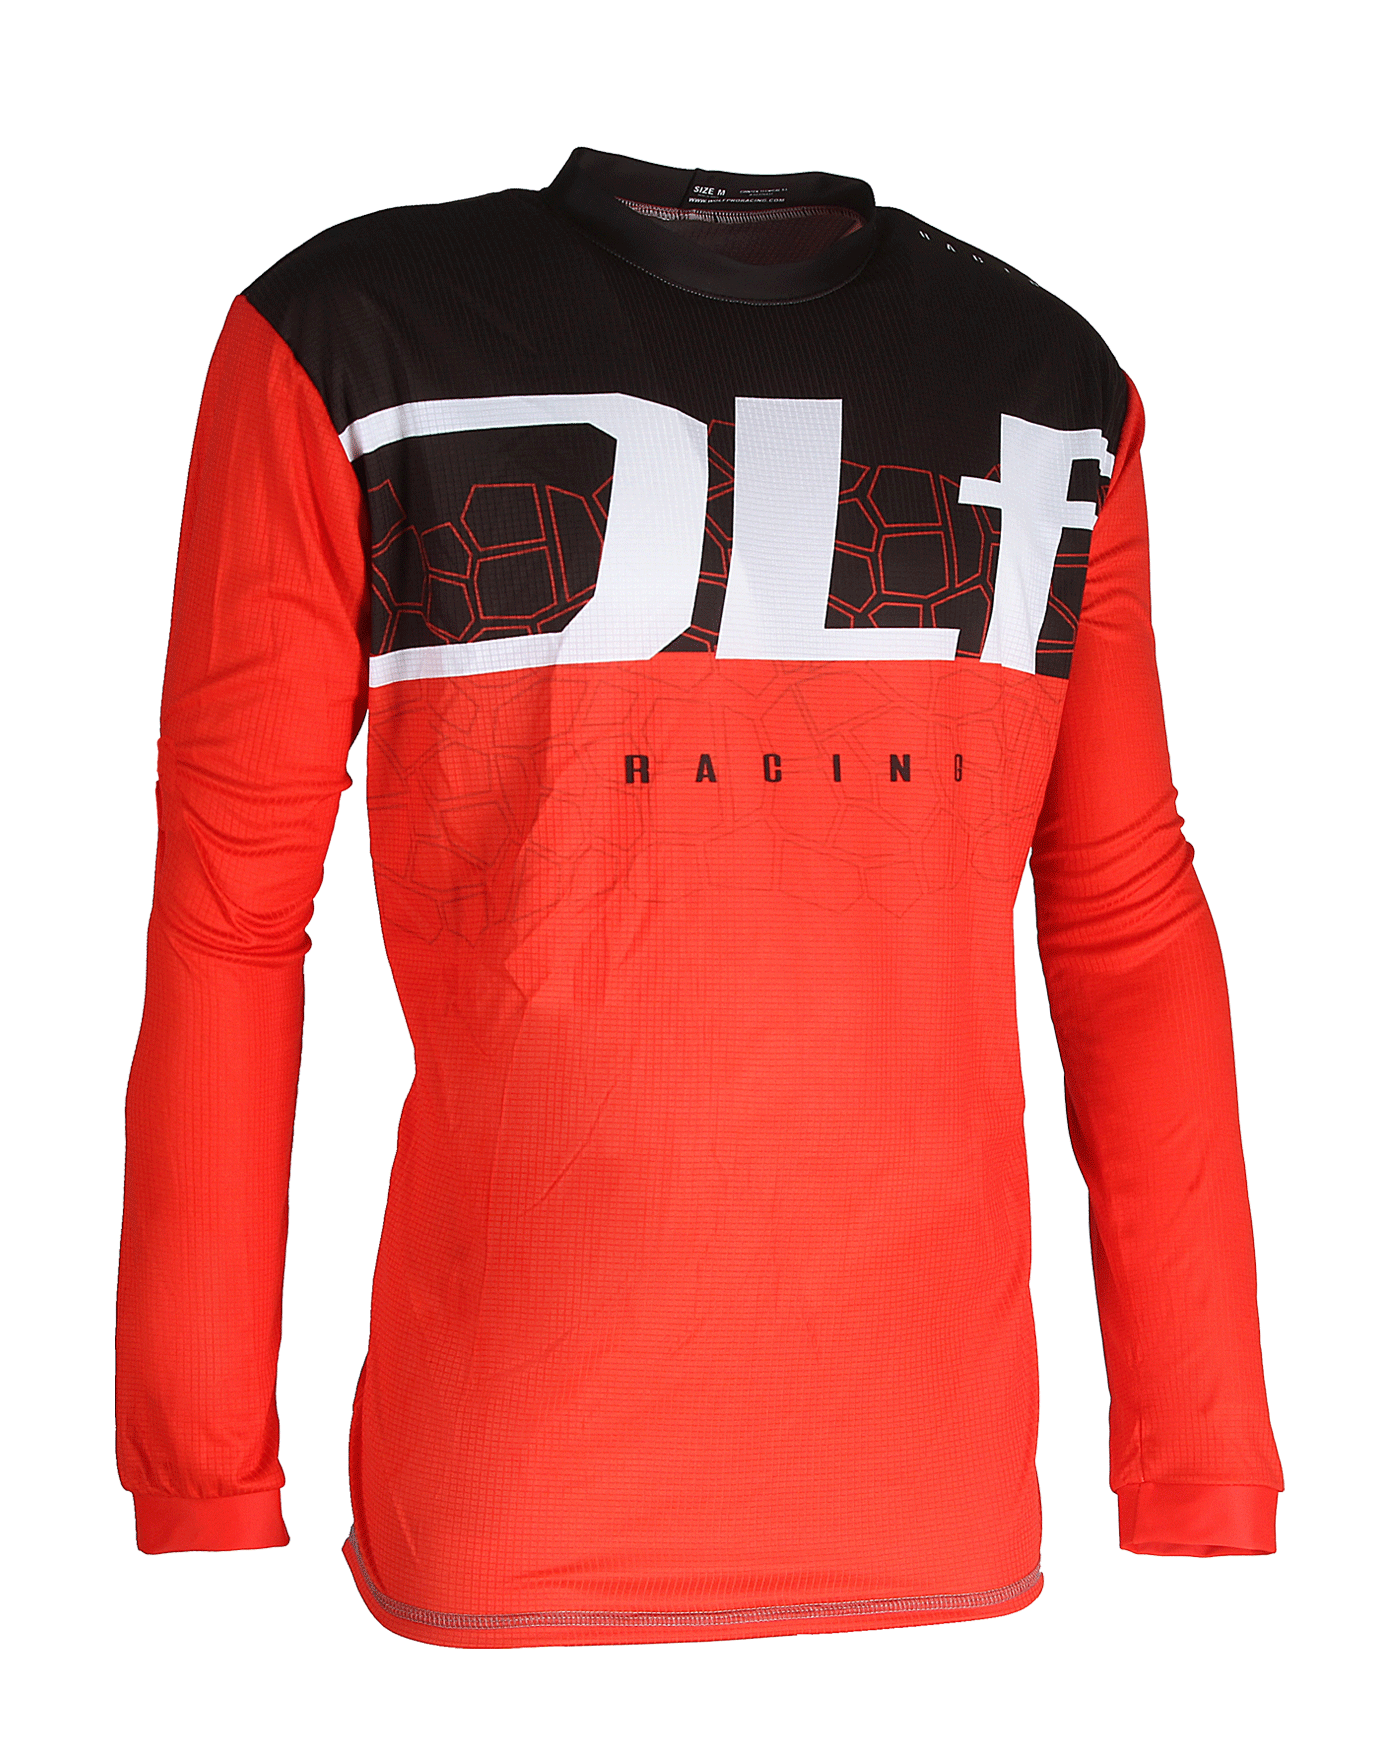 Camiseta Trial Ready | Wolfpro racing - Ropa personalizada